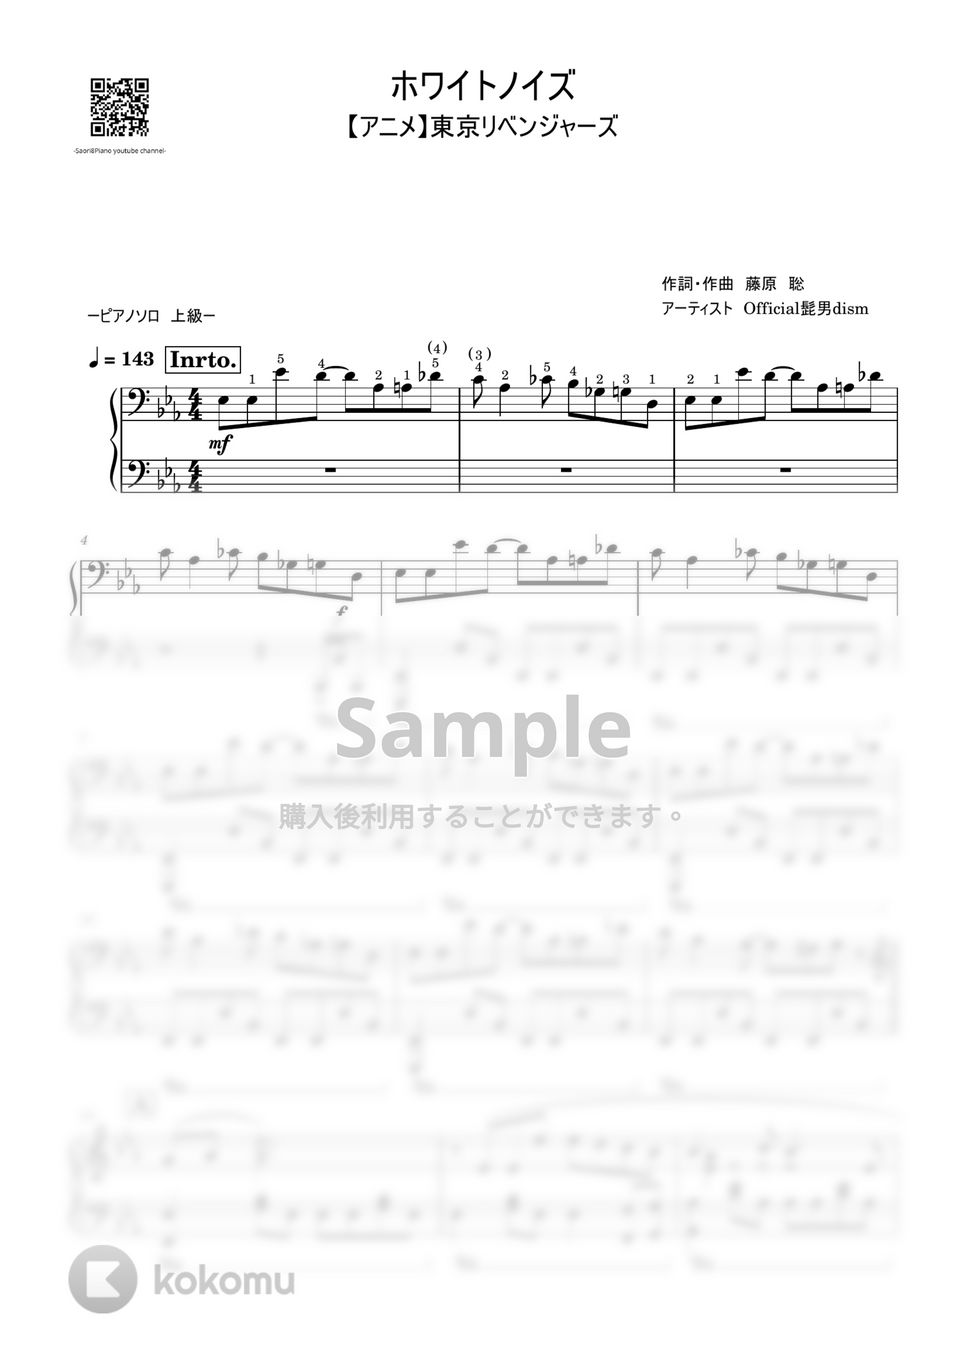 Official髭男dism - ホワイトノイズ (東京リベンジャーズ/上級レベル) by Saori8Piano